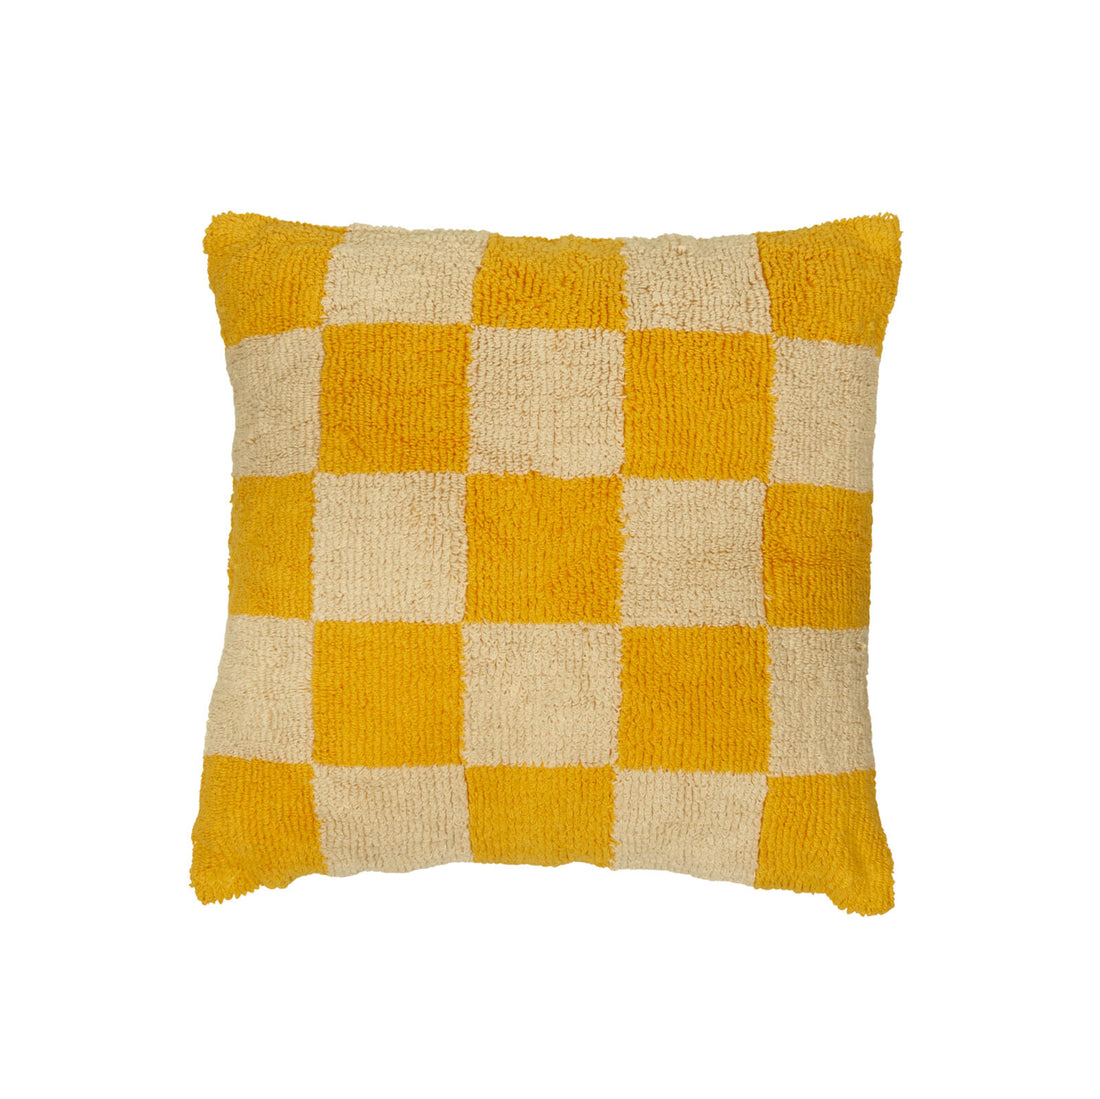 QUADRADO Yellow pillow